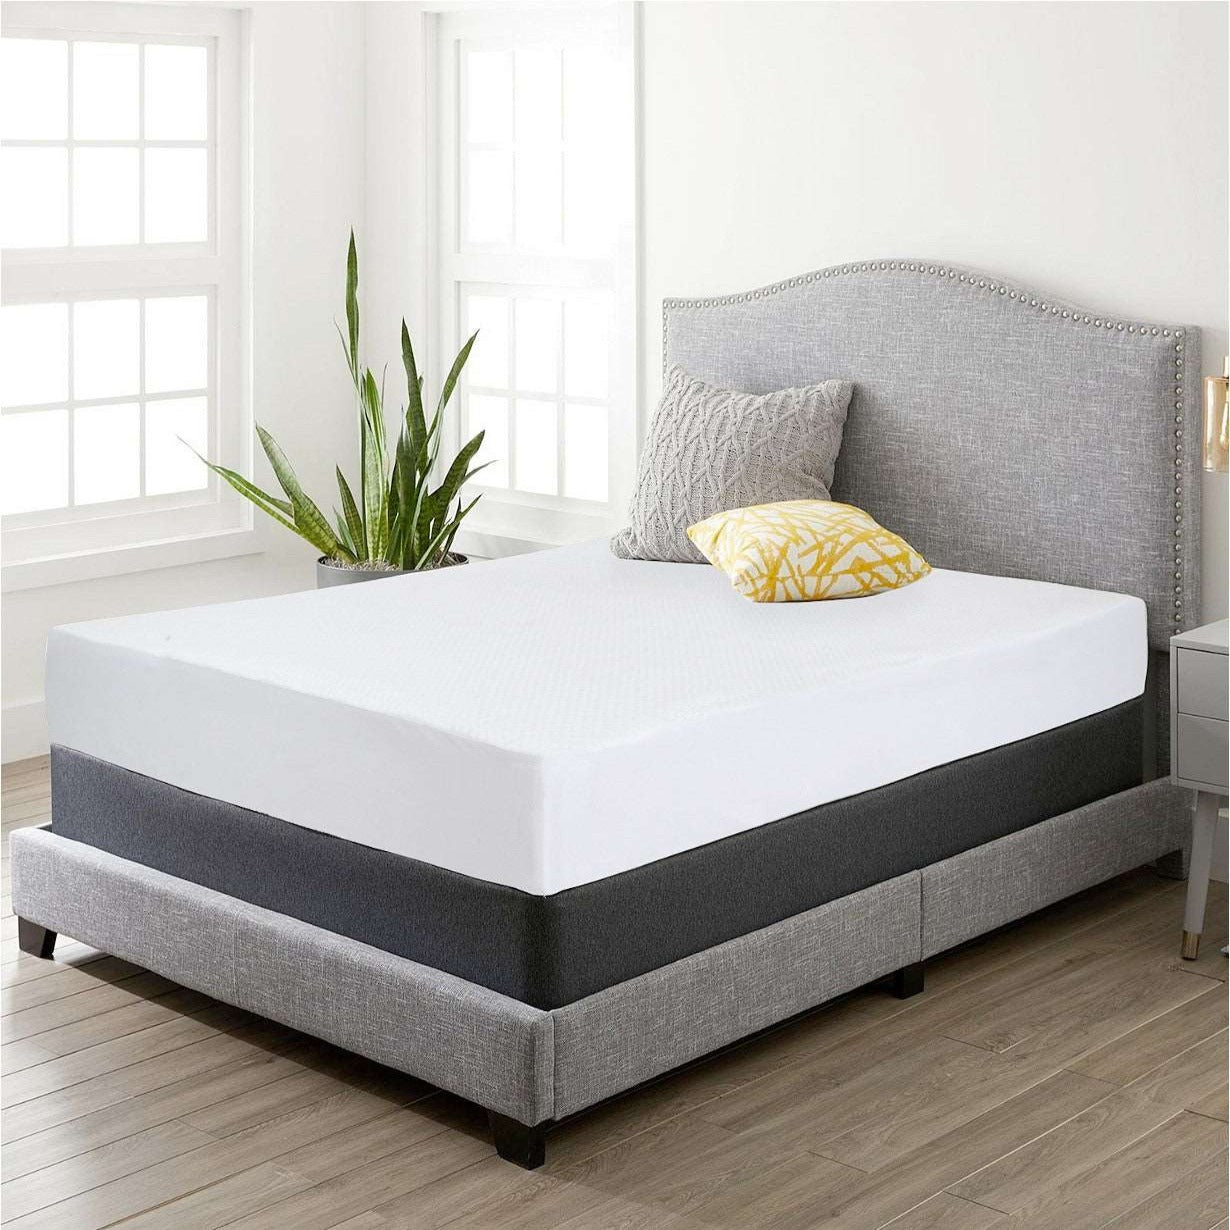 Beauty Sleep Air Layered Waterproof & Antibacterial Mattress Protector. - Bed Bath Fashions